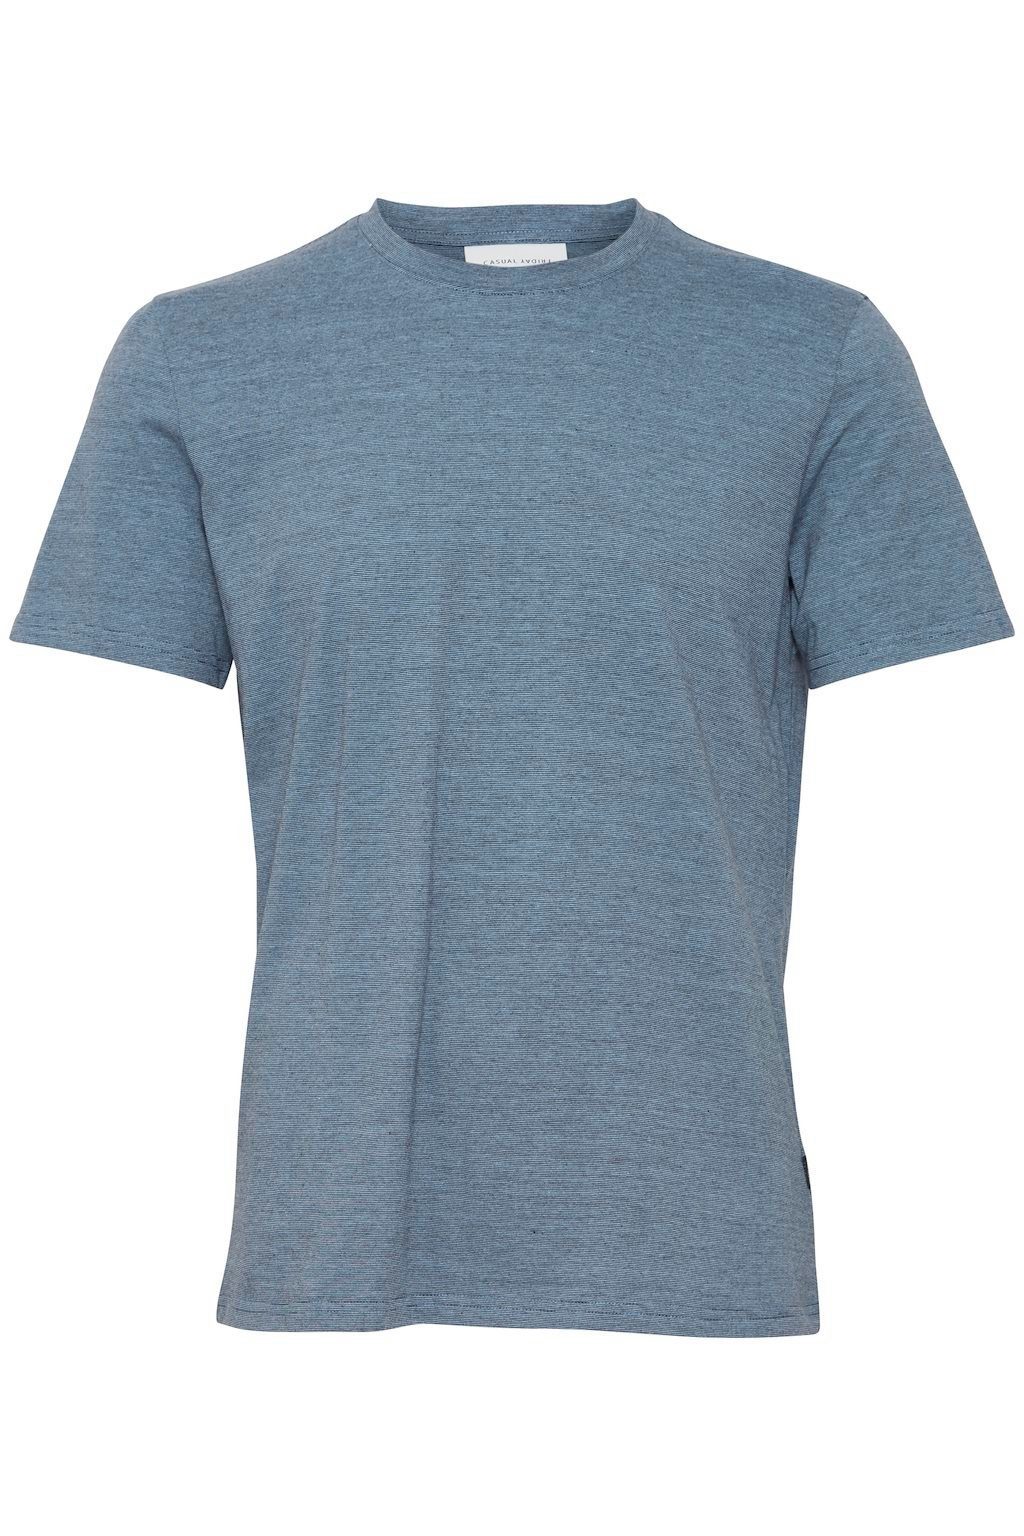 T-Shirt 5743 Friday in Casual Basic Meliert CFThor Rundhals Blau T-Shirt